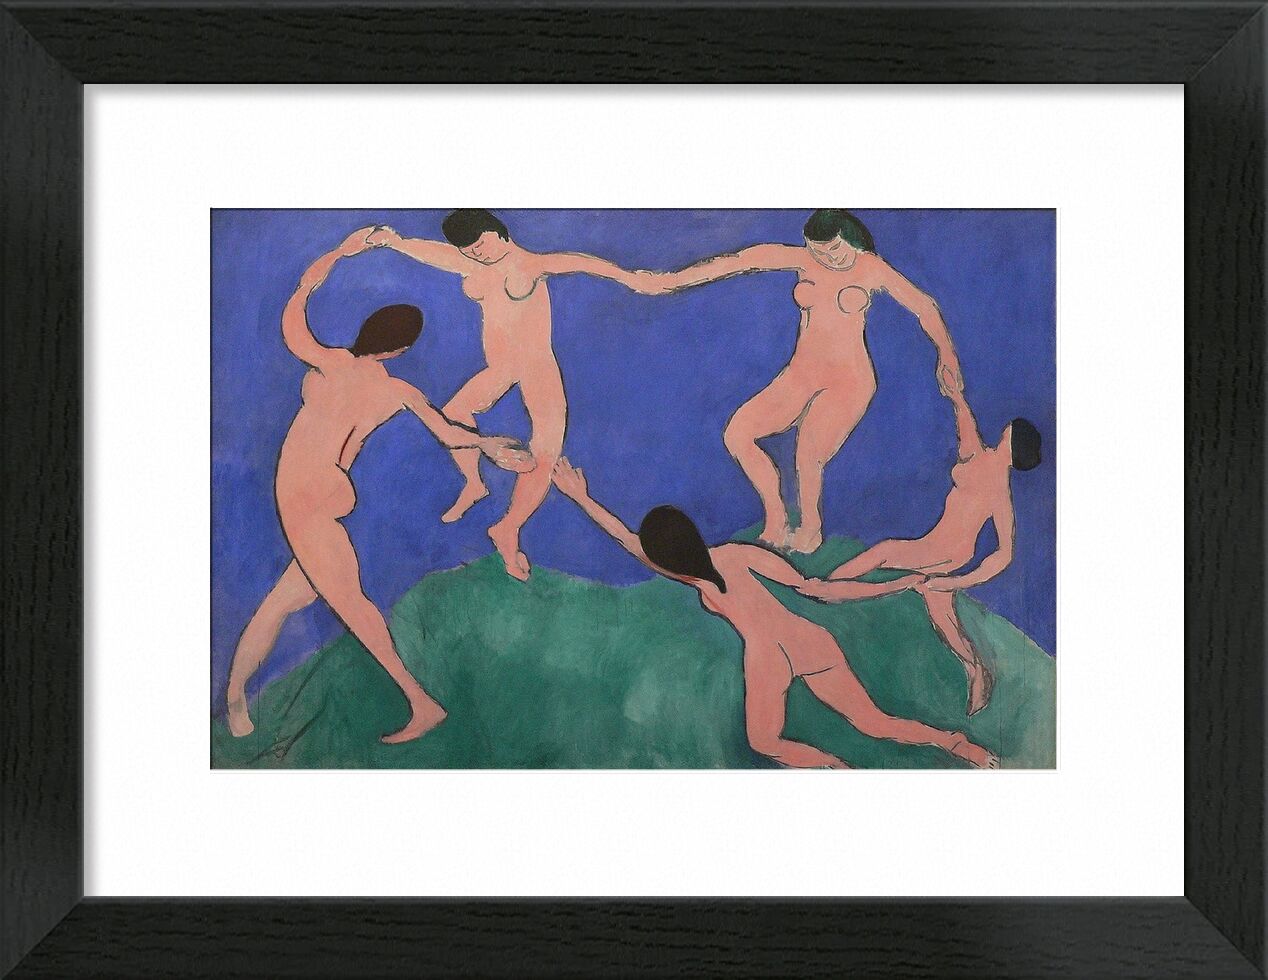 Dance I - Henri Matisse desde Bellas artes, Prodi Art, Matisse, pintura, música, danza, desnudo